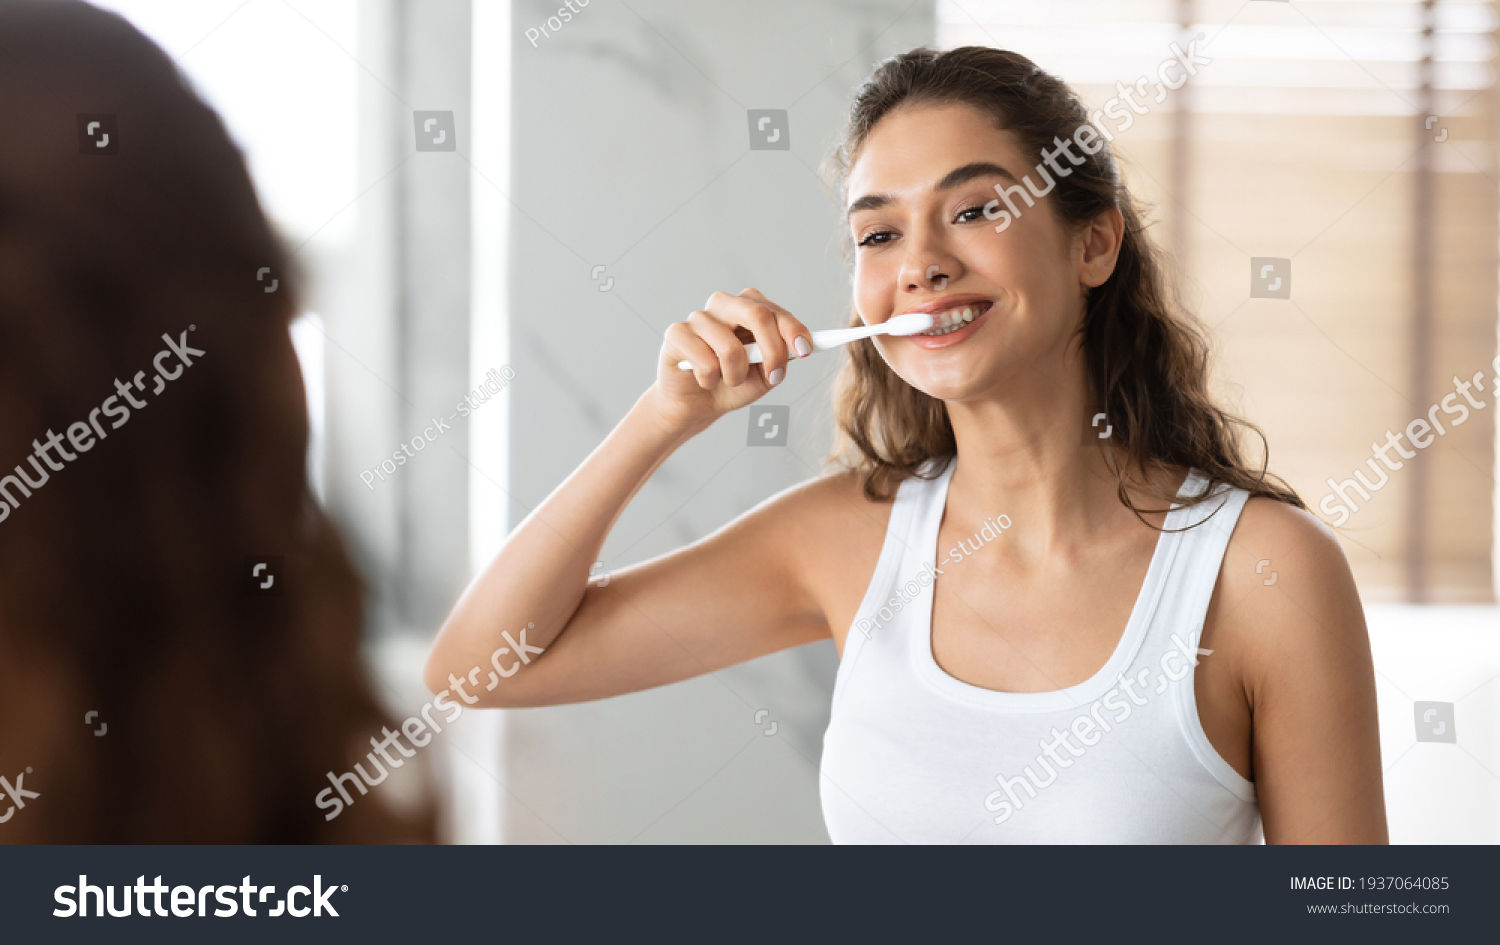 Happy Lady Brushing Teeth With Toothbrush Standing In Bathroom Indoor #1937064085